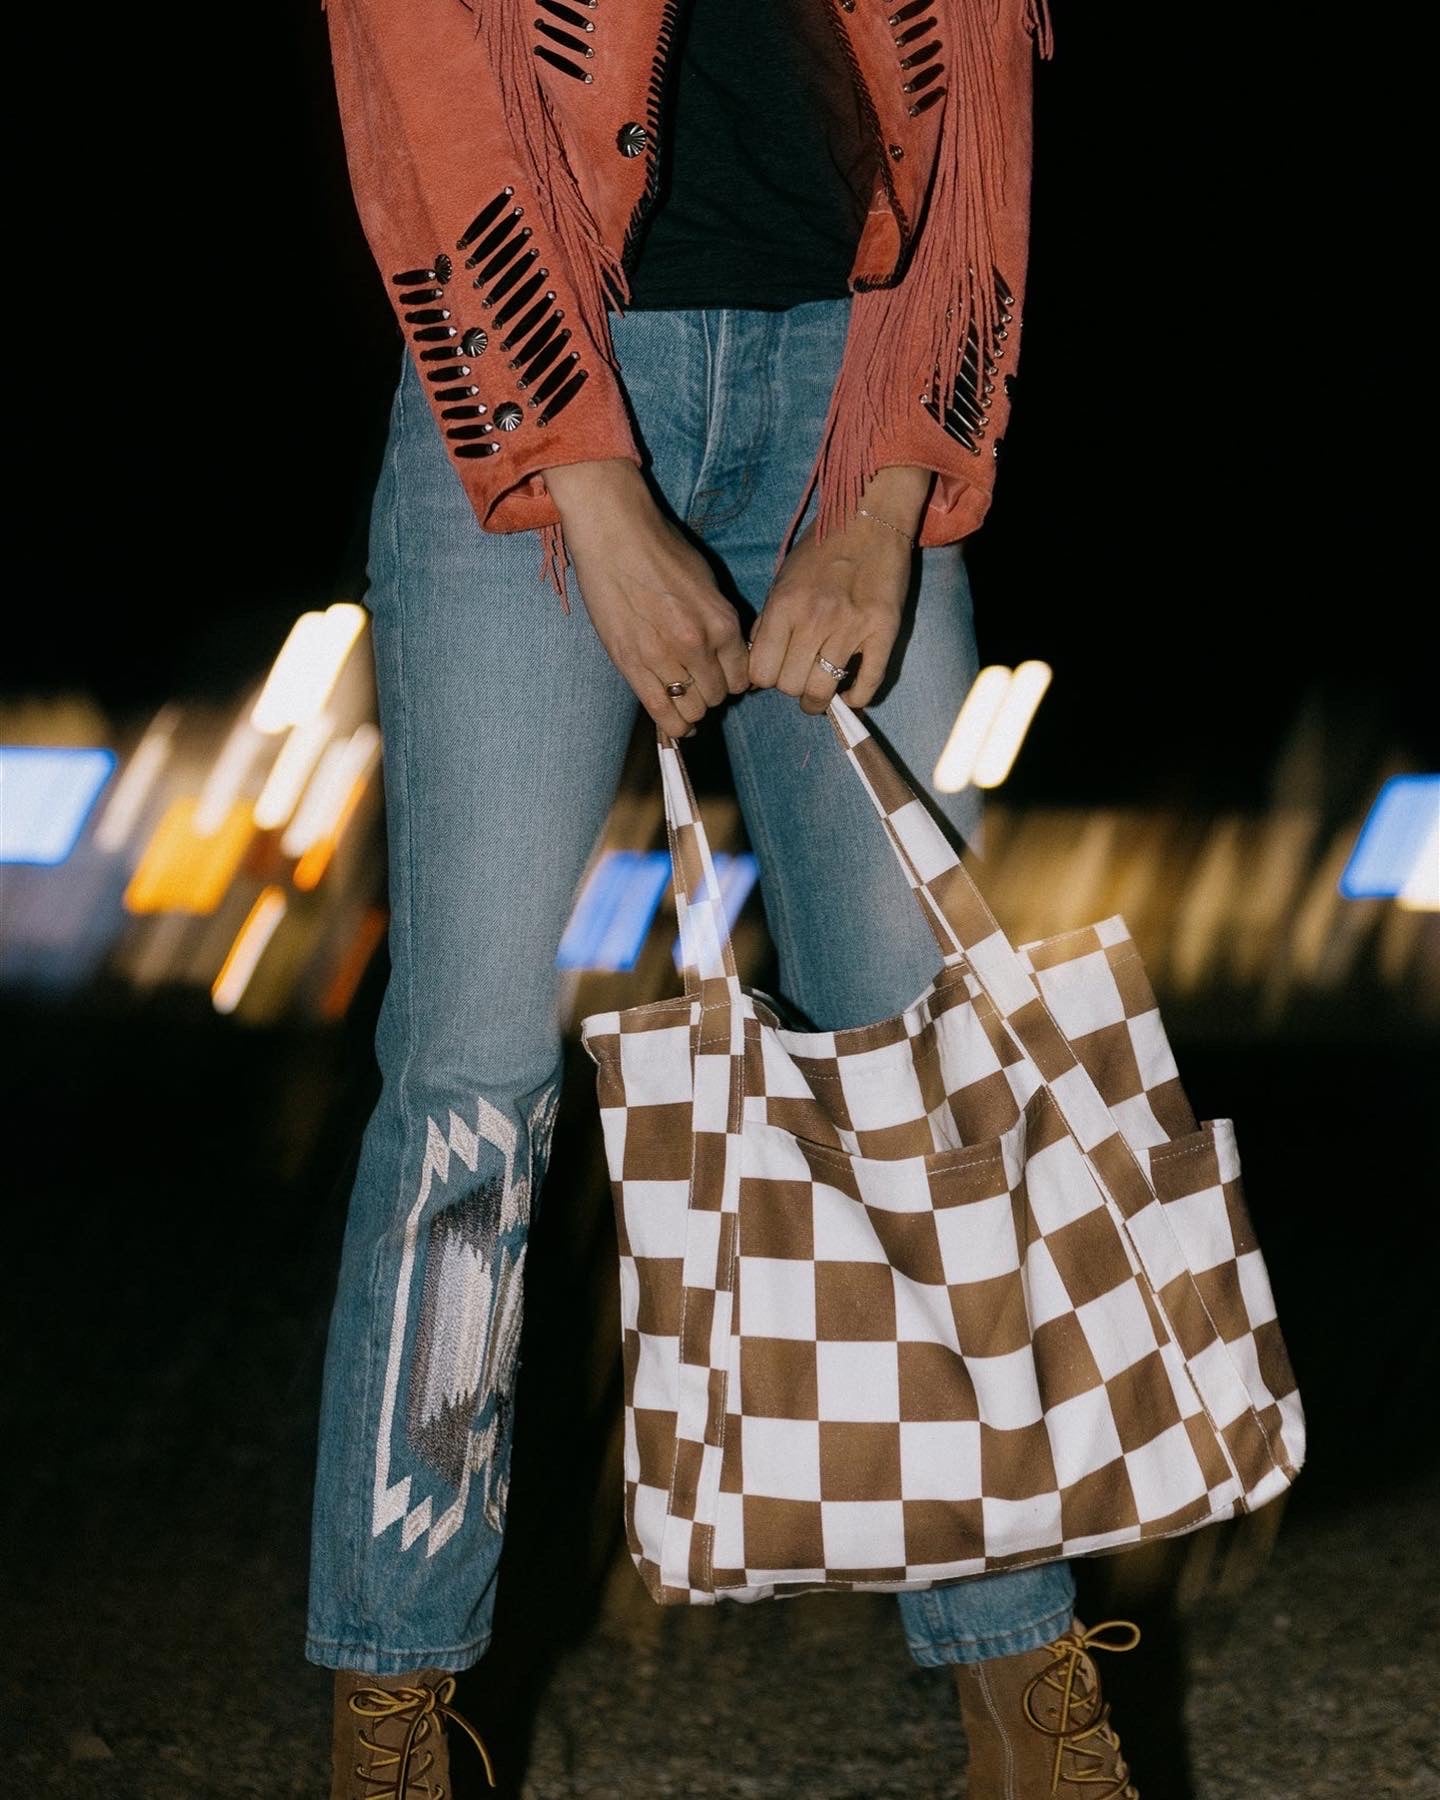 Louis Vuitton Tote Checkered Bags & Handbags for Women